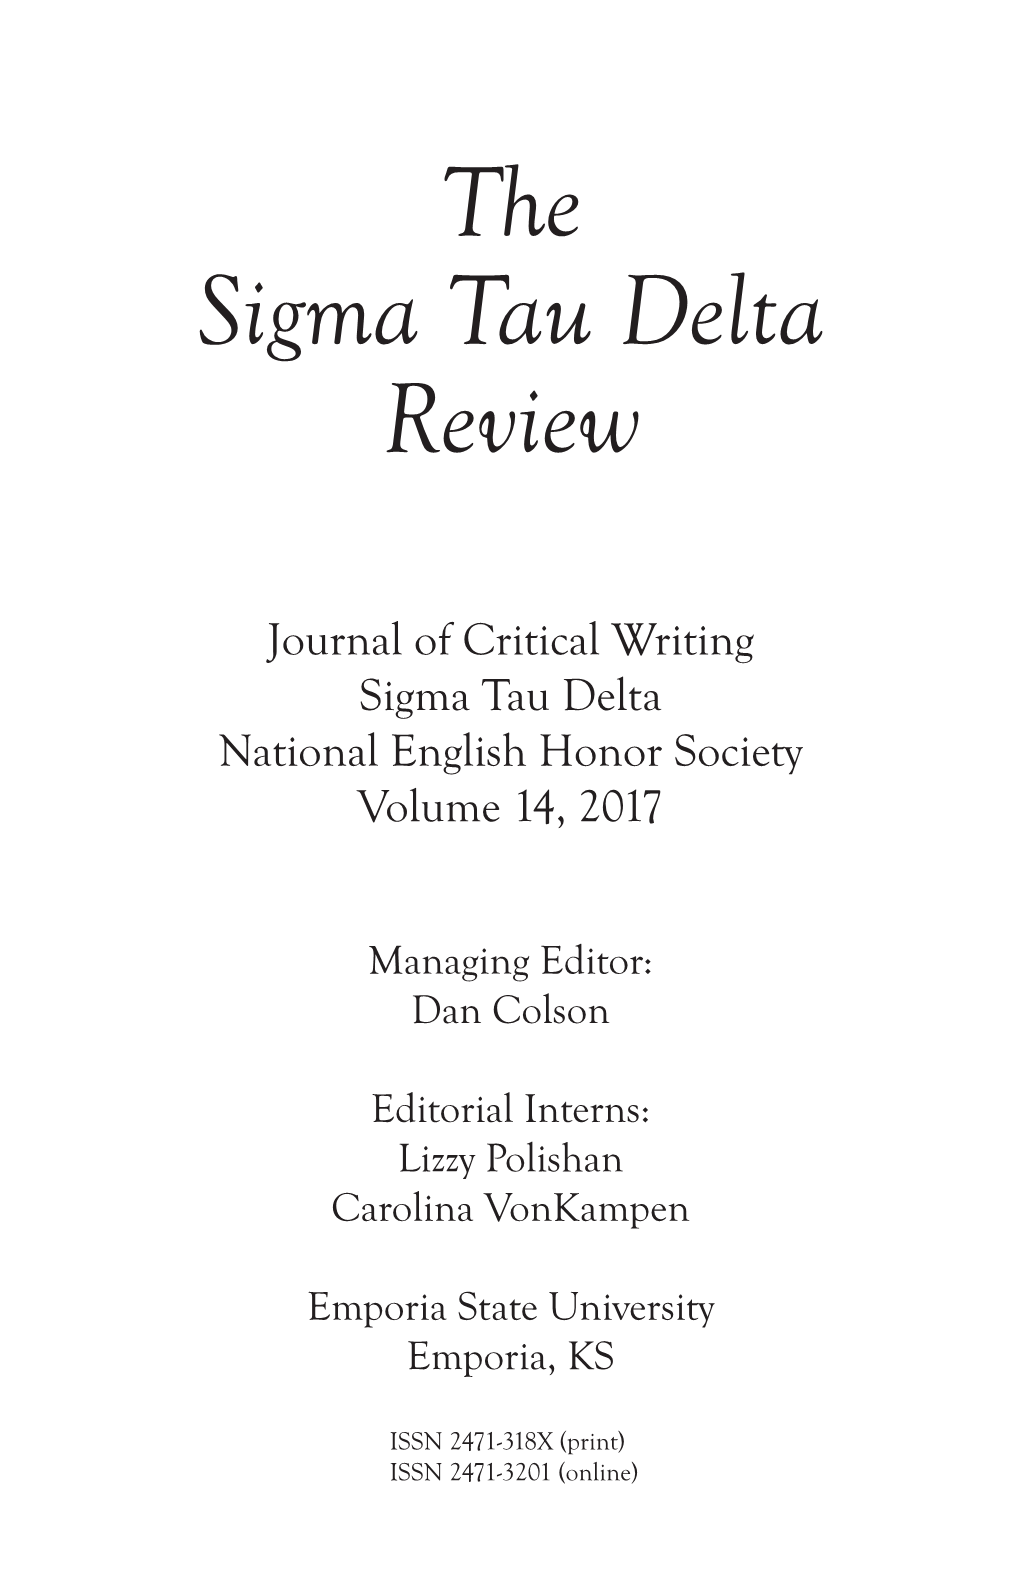 The Sigma Tau Delta Review